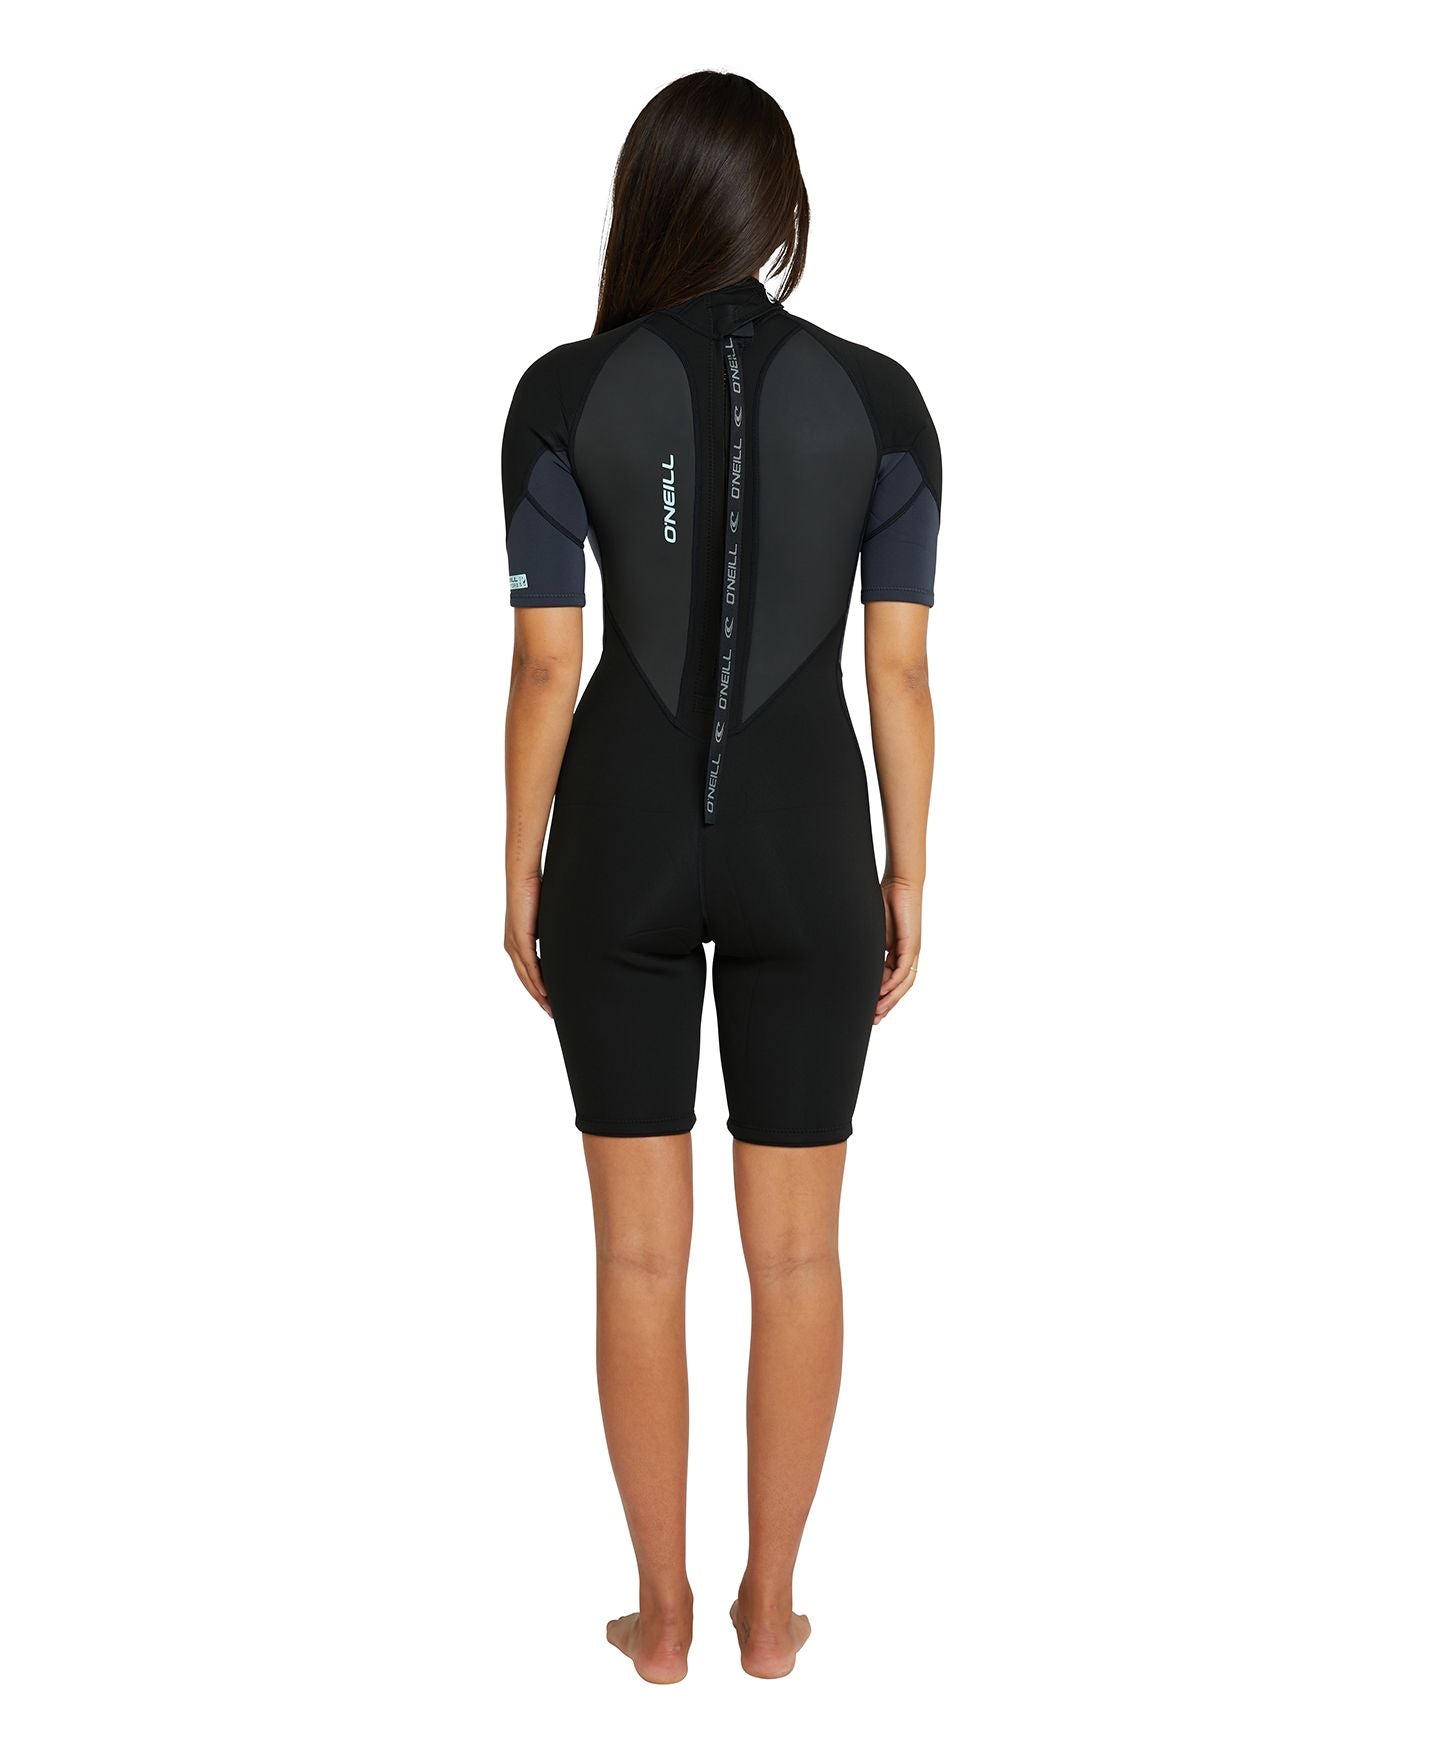 Women's Reactor 2mm Spring Suit Wetsuit - Black Gunmetal